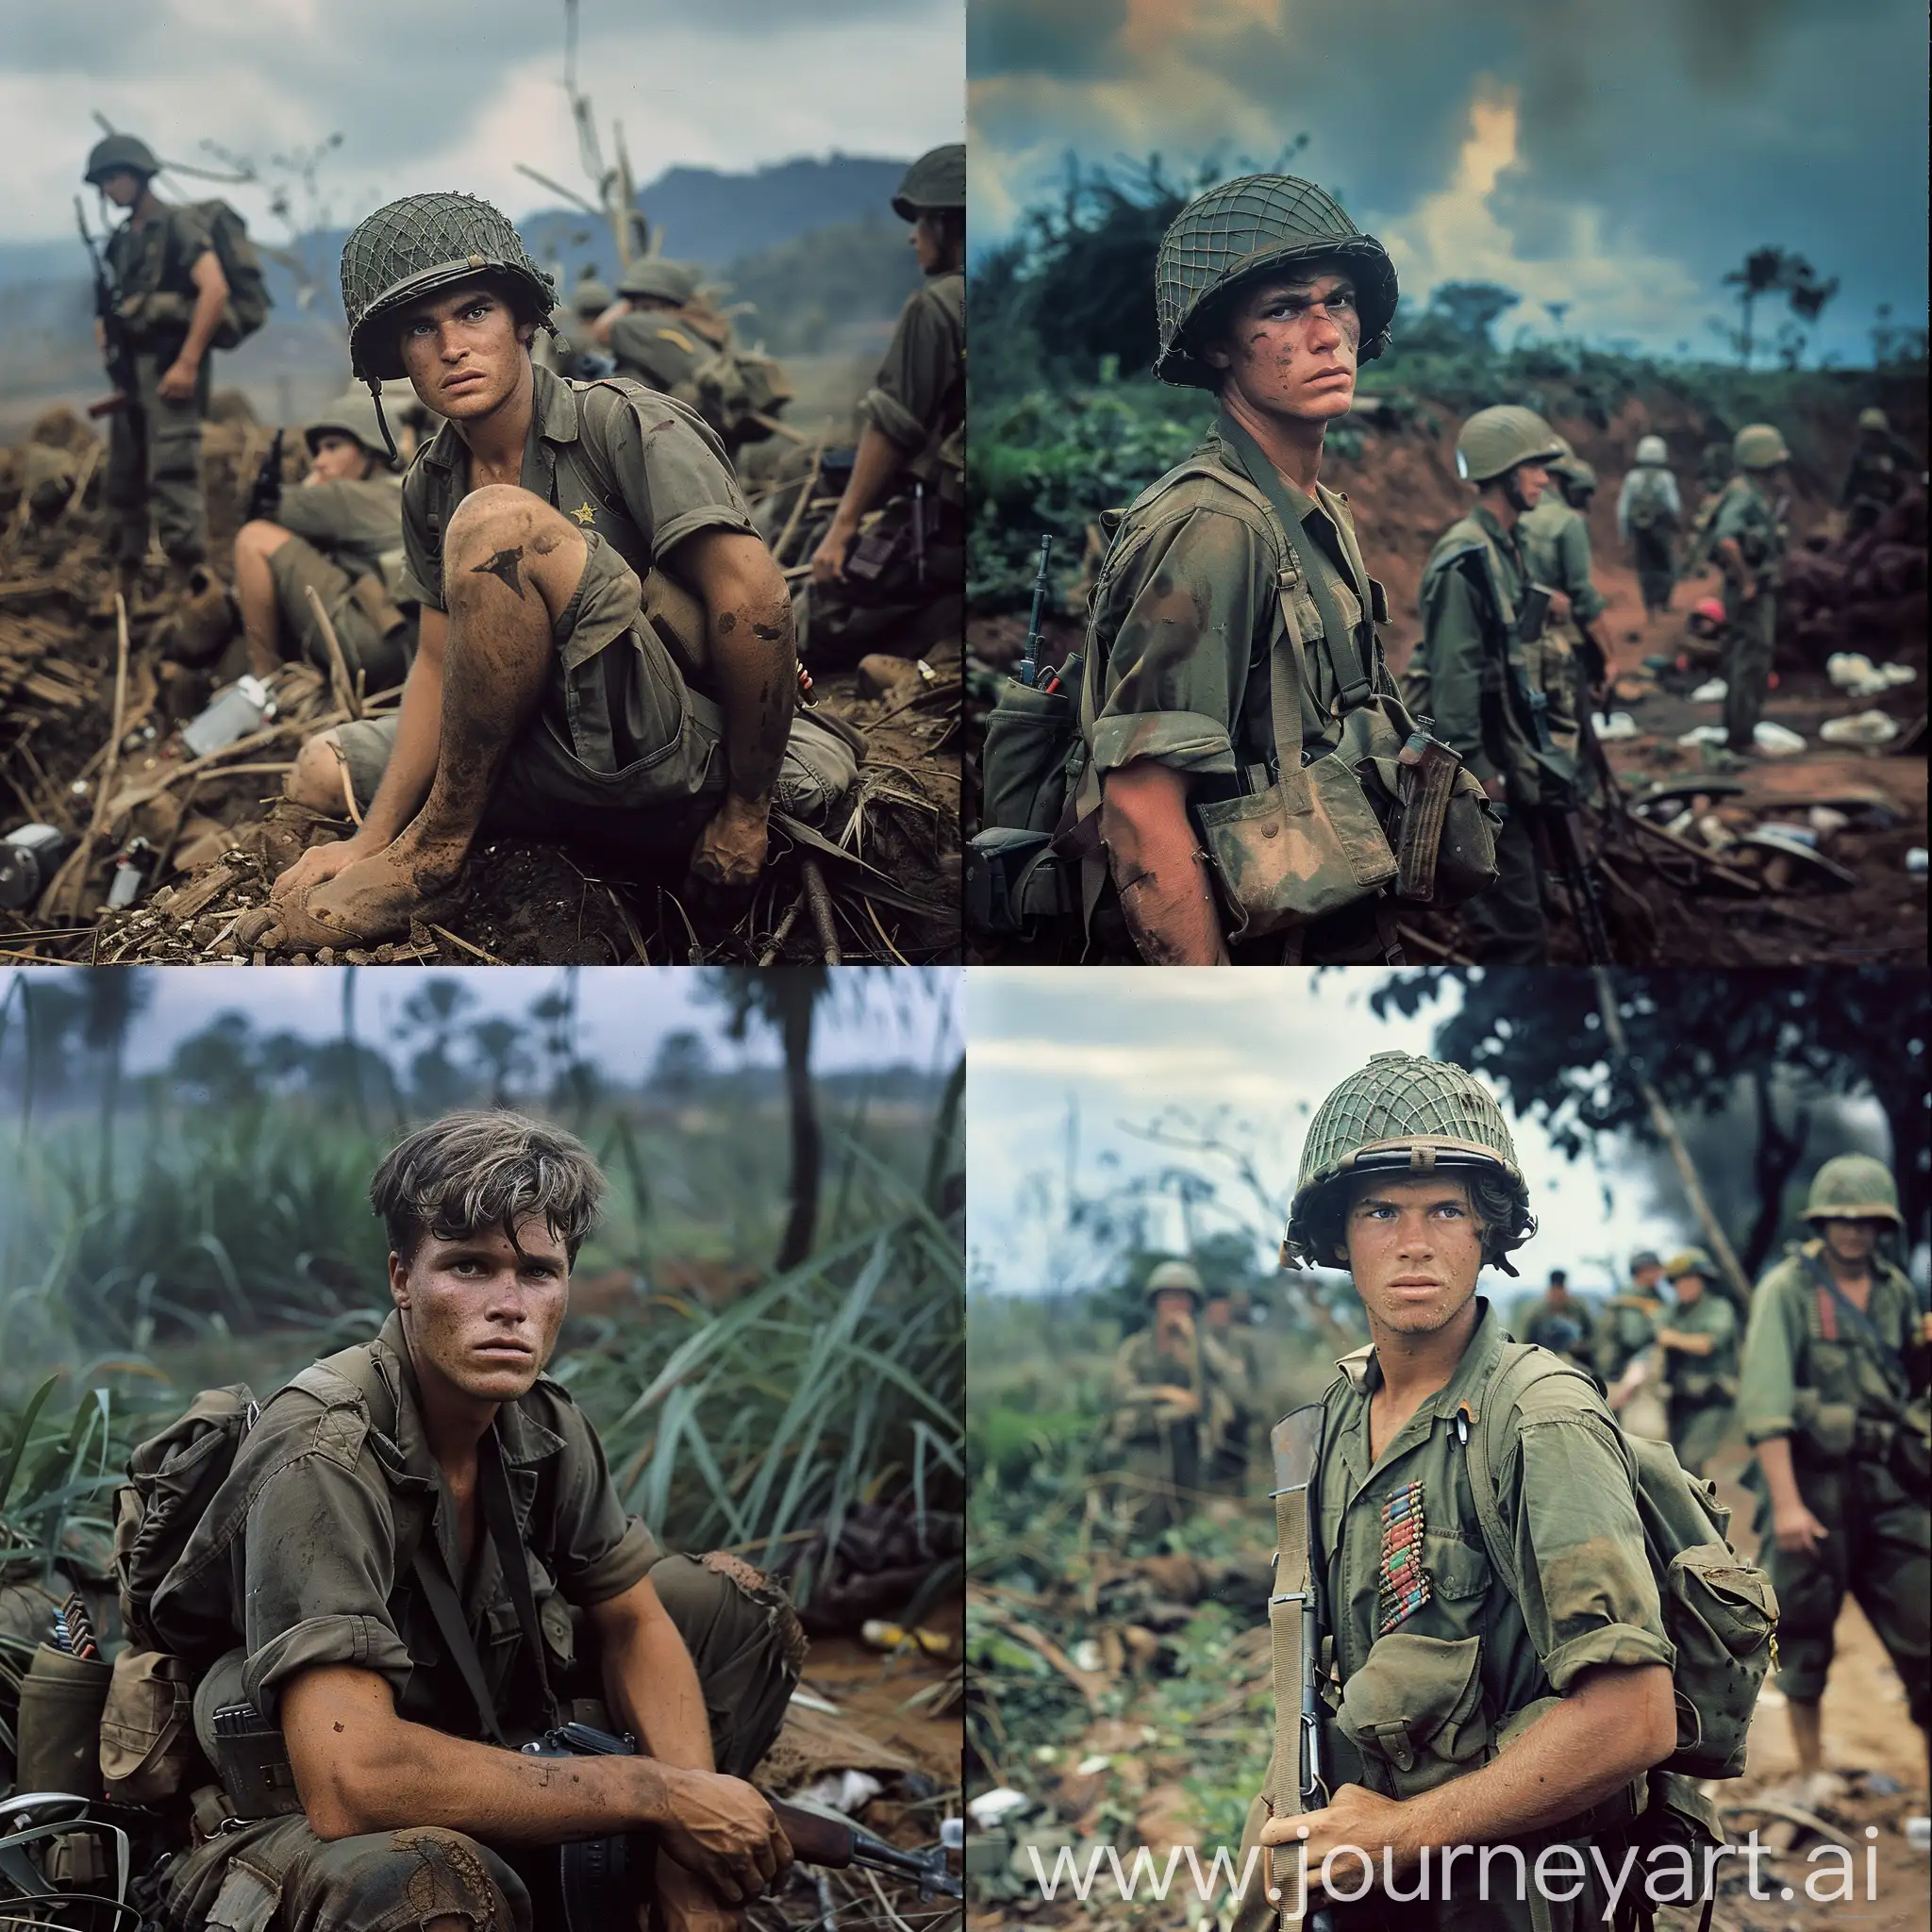 Patrick-Star-Amidst-the-Vietnam-War-Memories